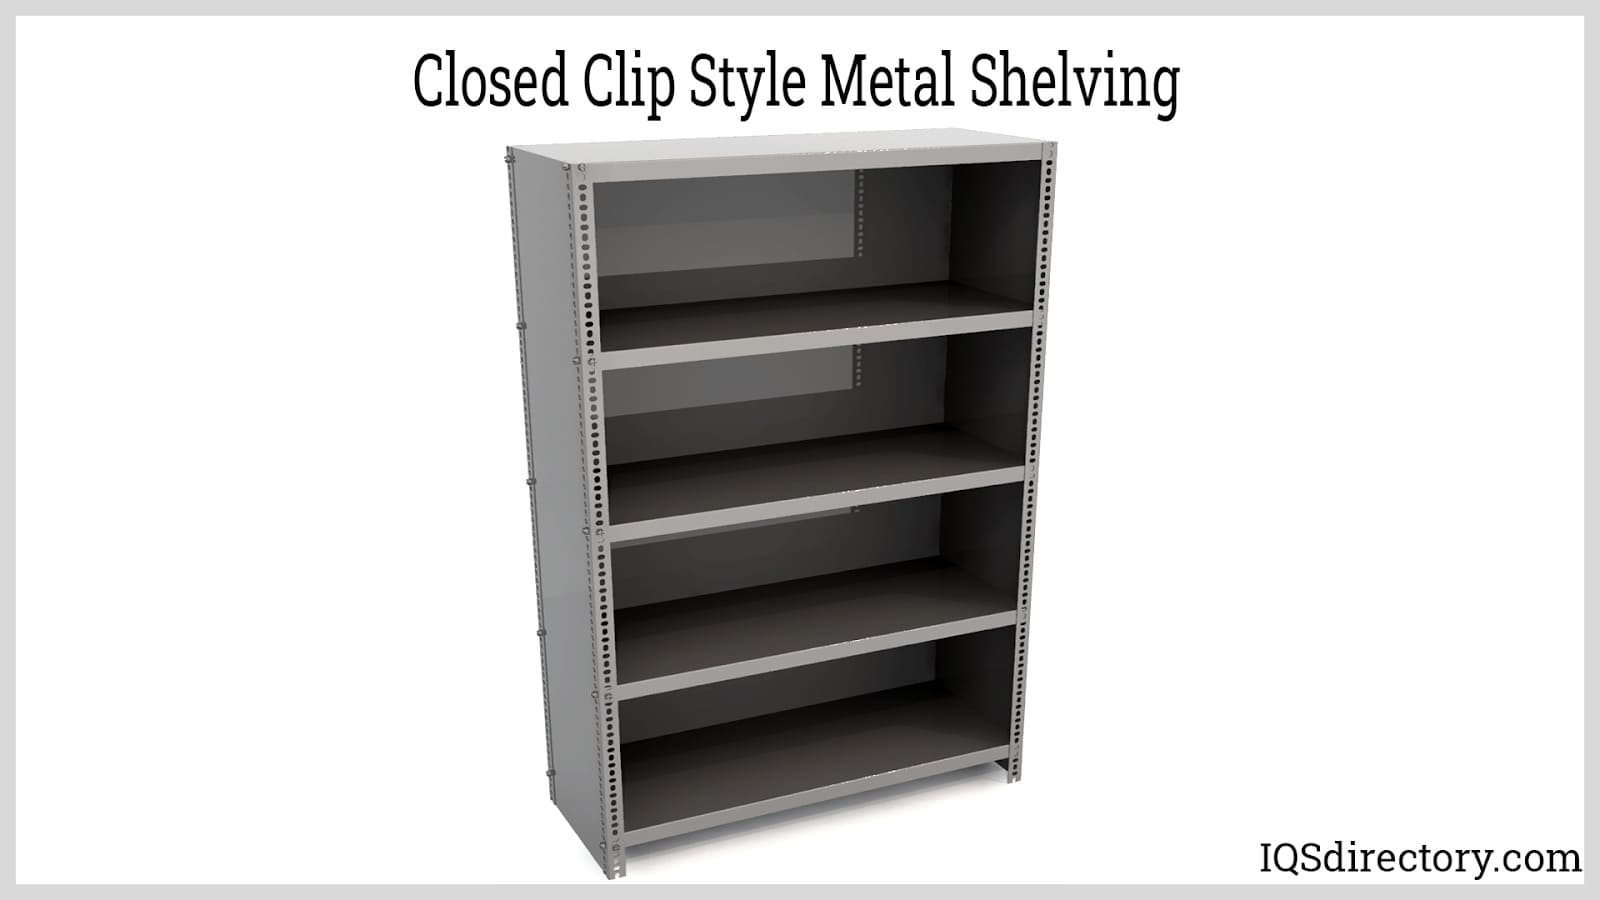 https://www.iqsdirectory.com/articles/steel-shelving/metal-shelving/closed-clip-style-metal-shelving.jpg